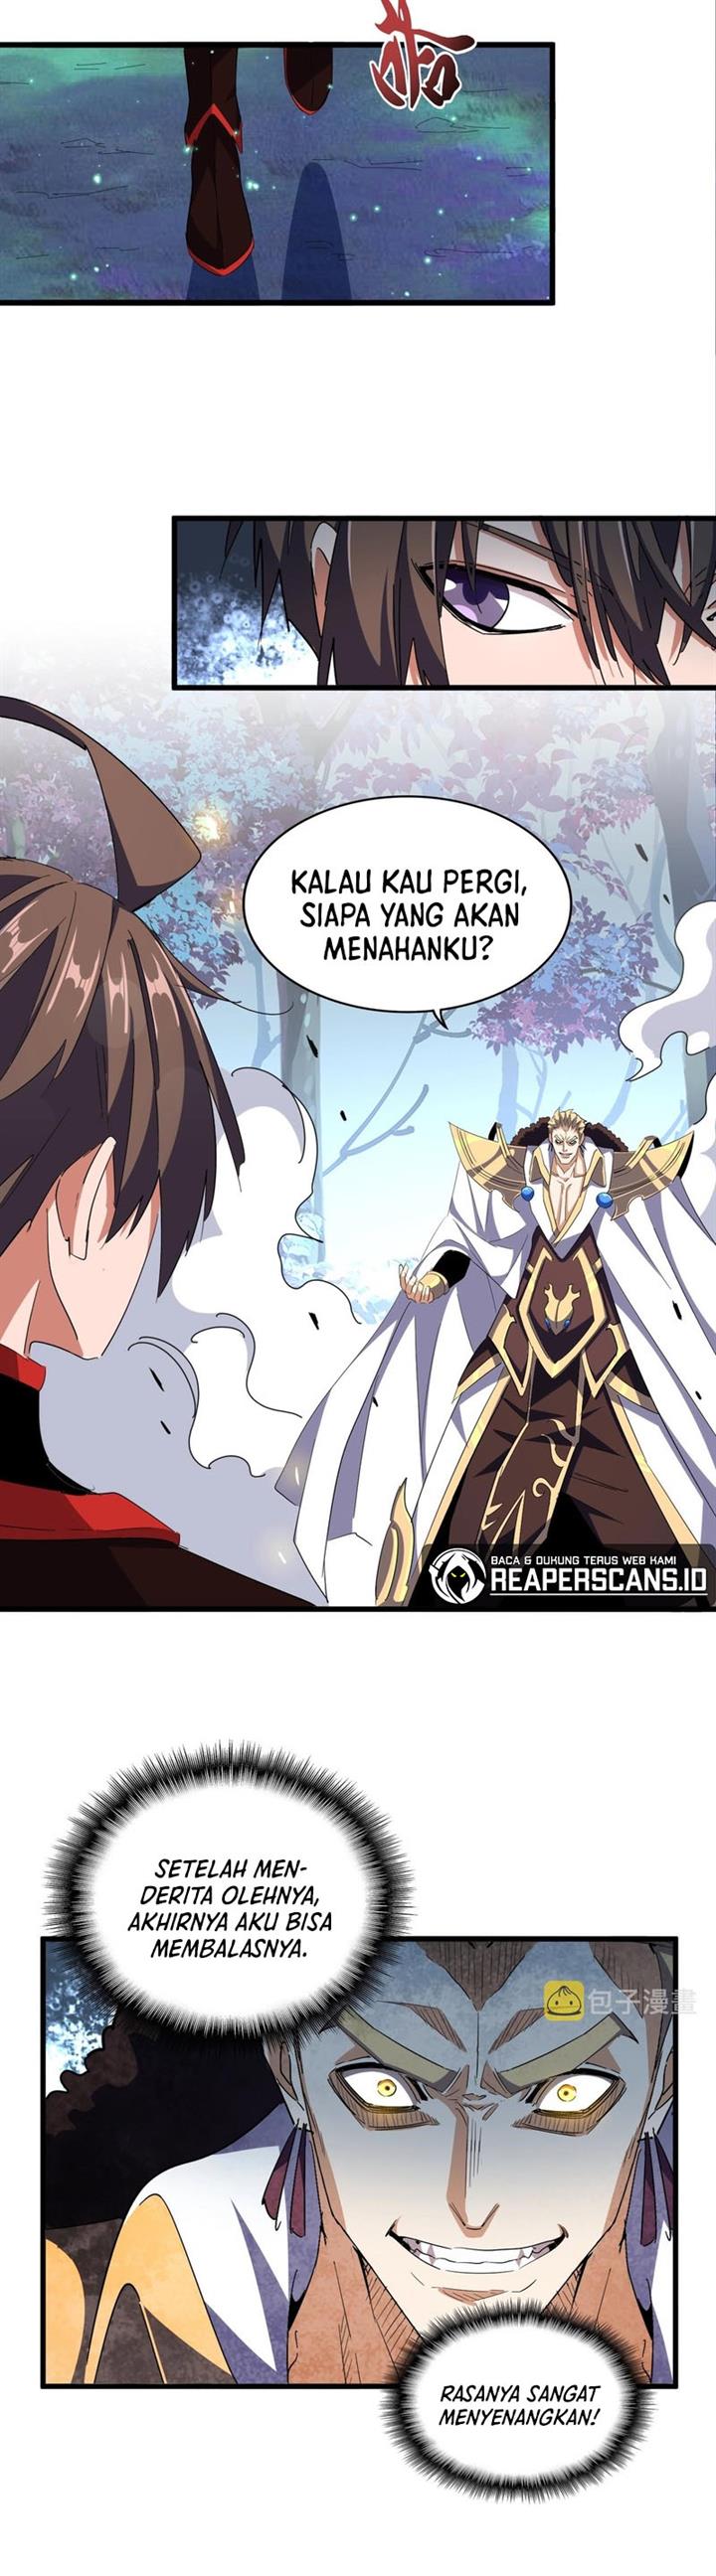 Magic Emperor Chapter 328